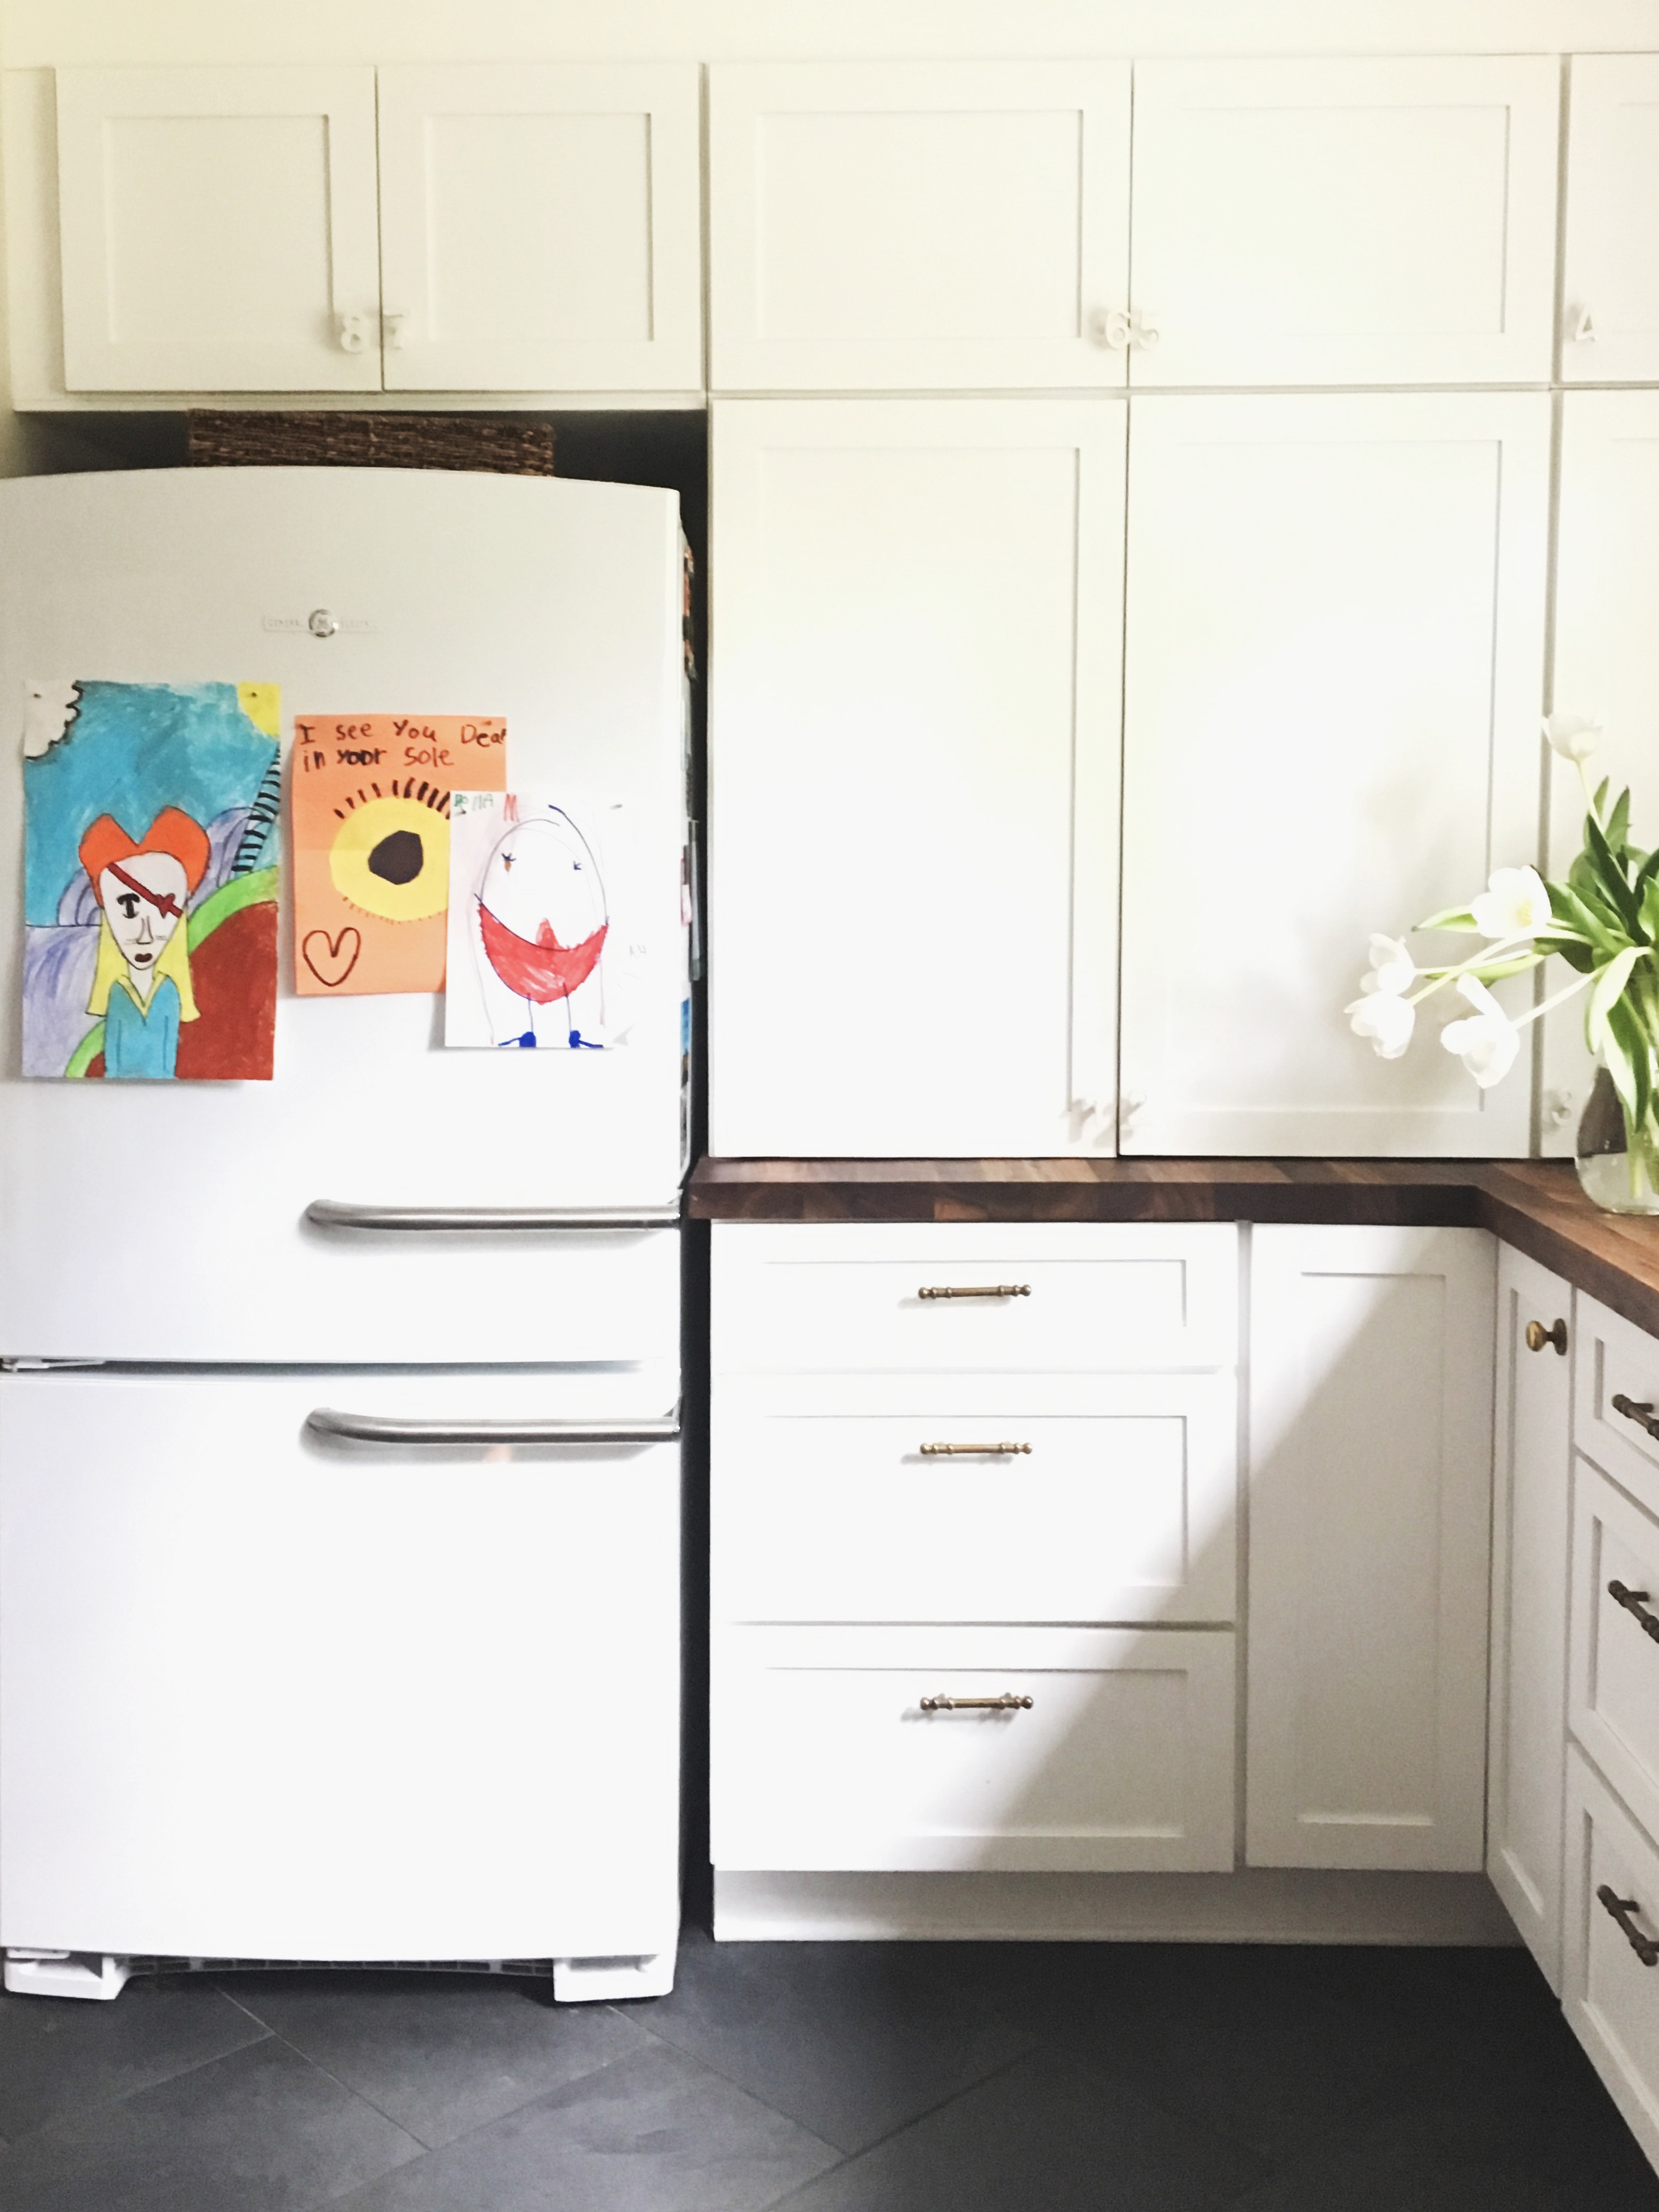 kid art on refrigerator, basket on top, white cabinets